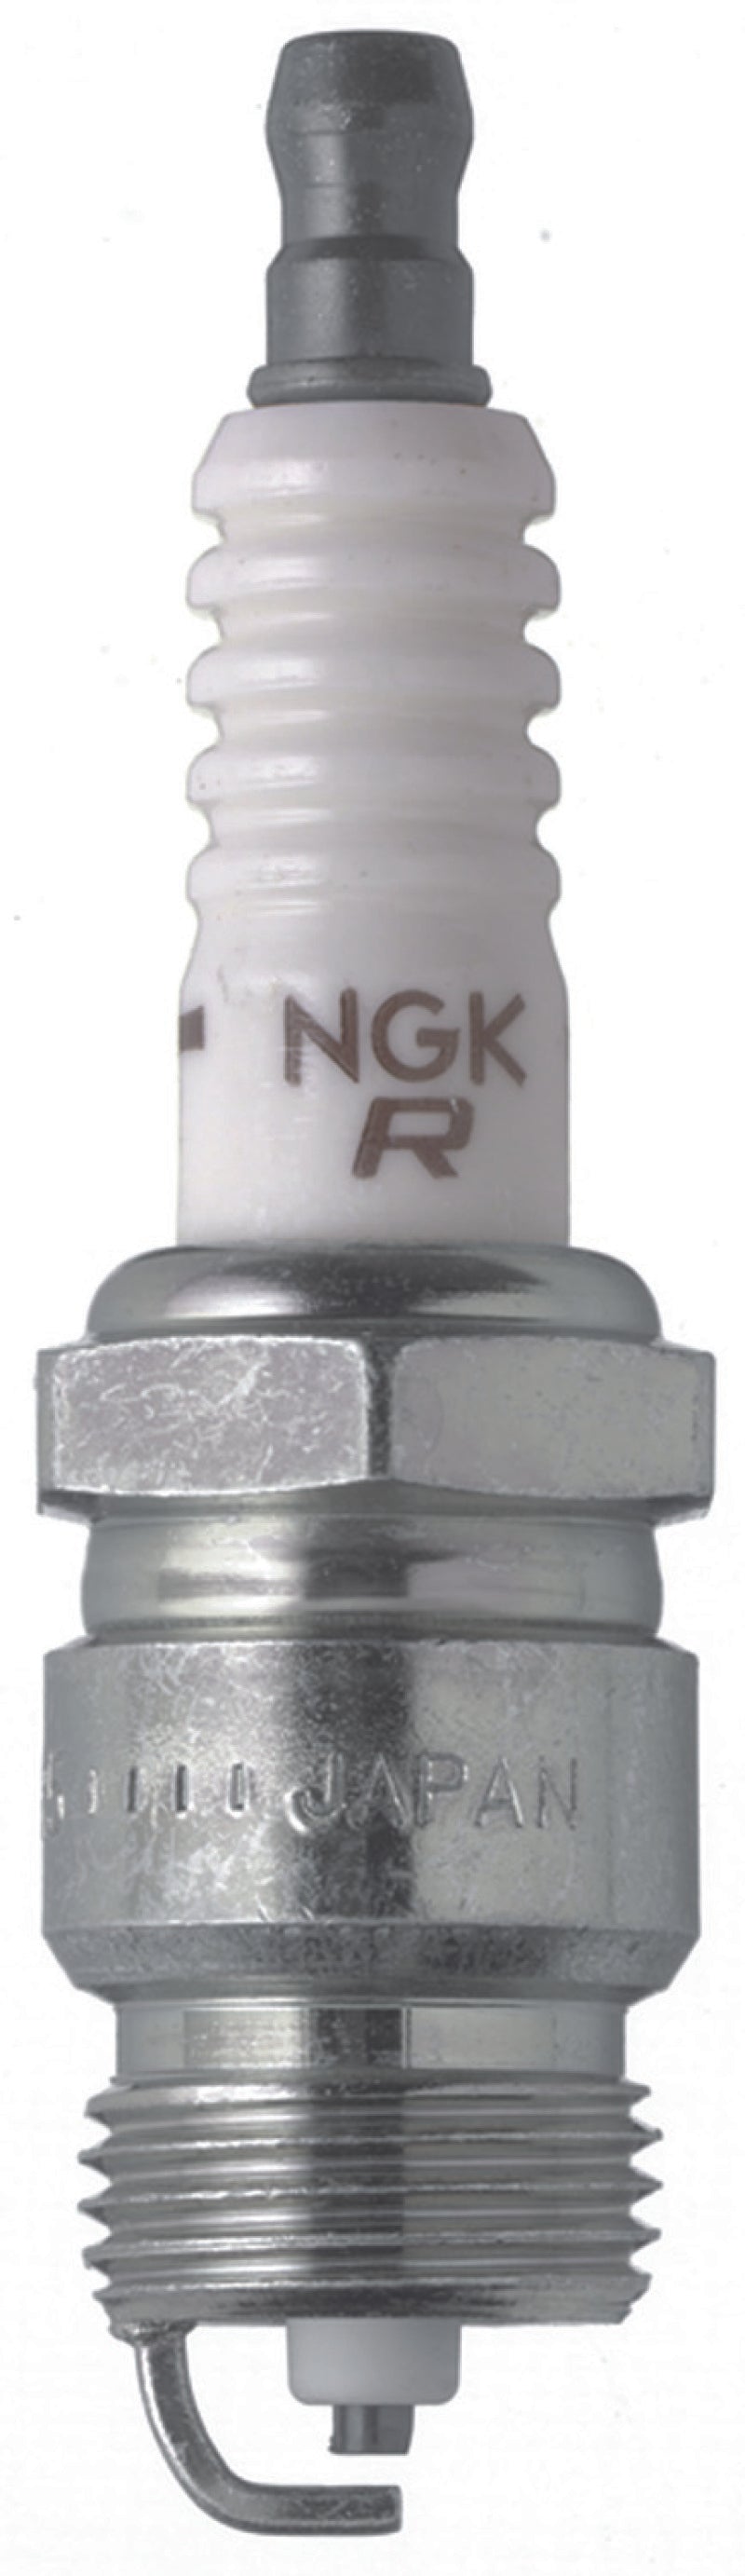 NGK V-Power Spark Plug Box of 4 (WR5)